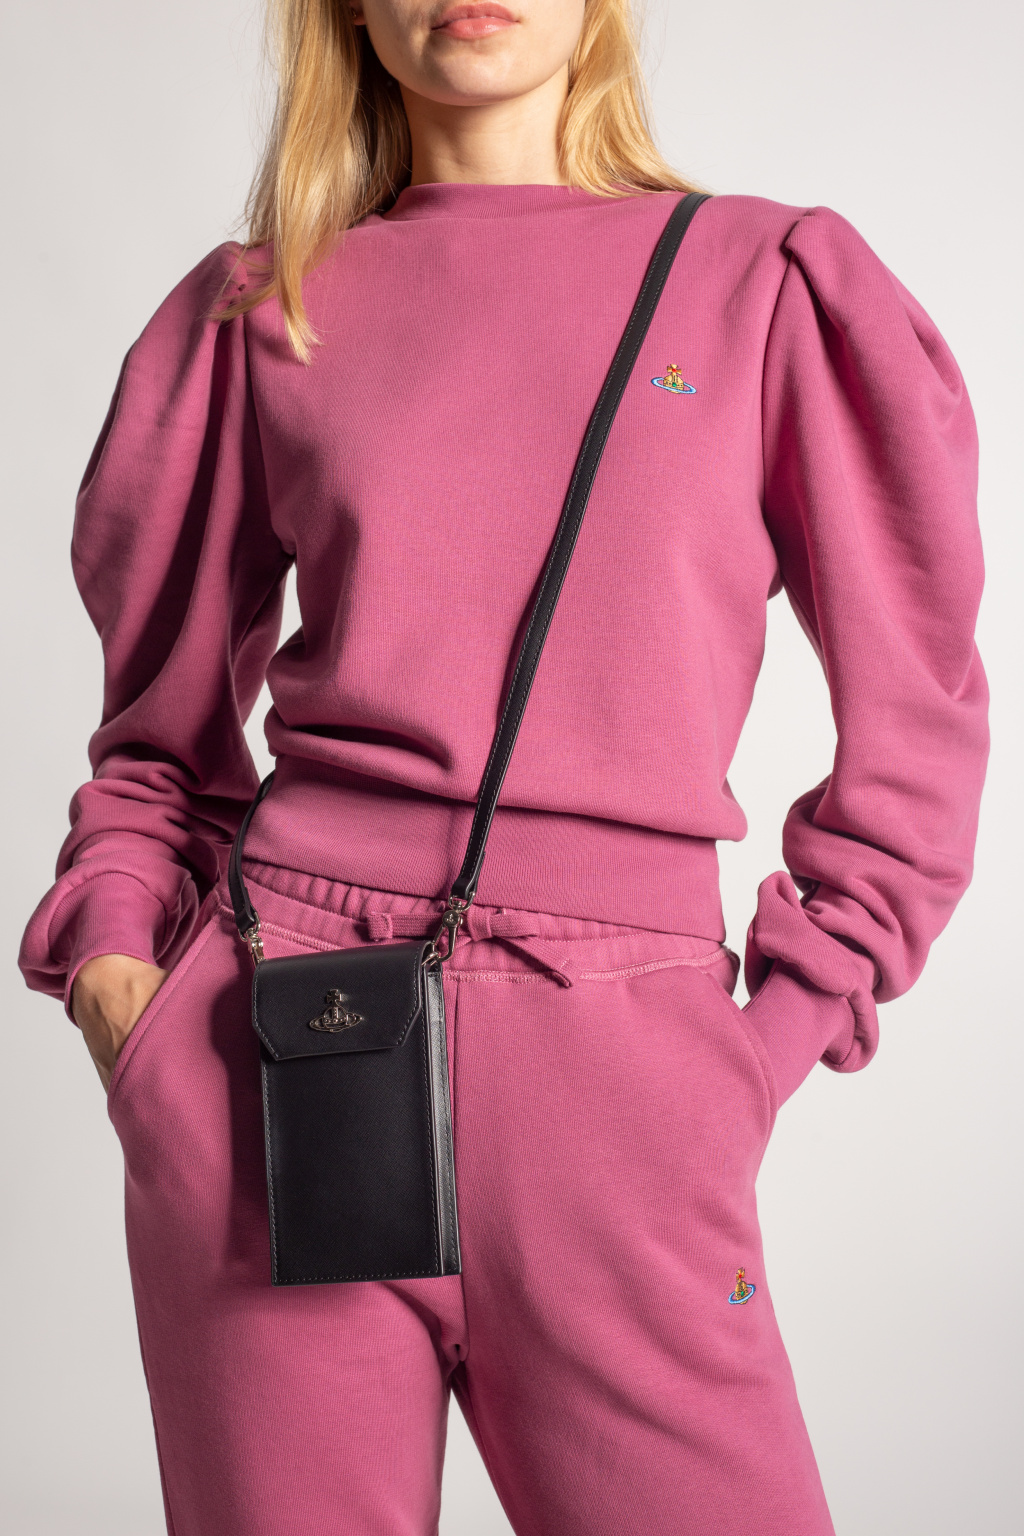 Vivienne Westwood Phone holder with strap | Women's Accessories